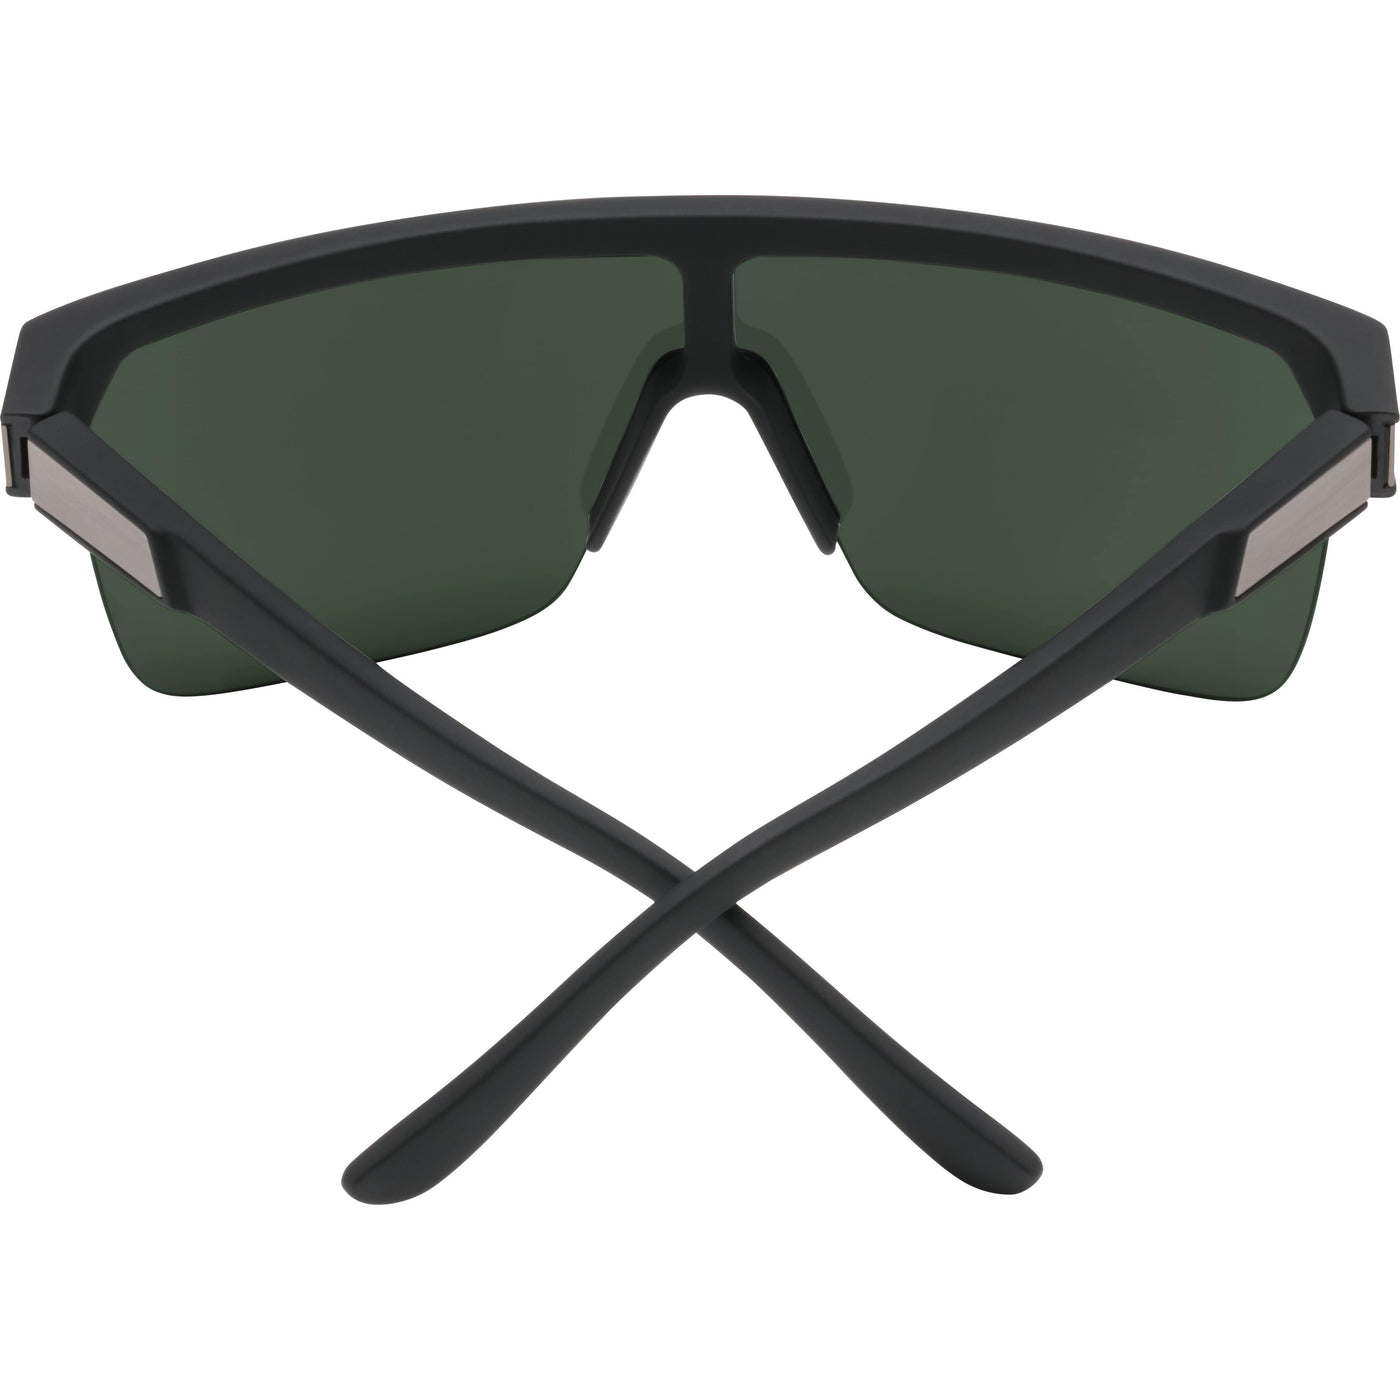 oversize semi-rimless sunglasses - gray/green